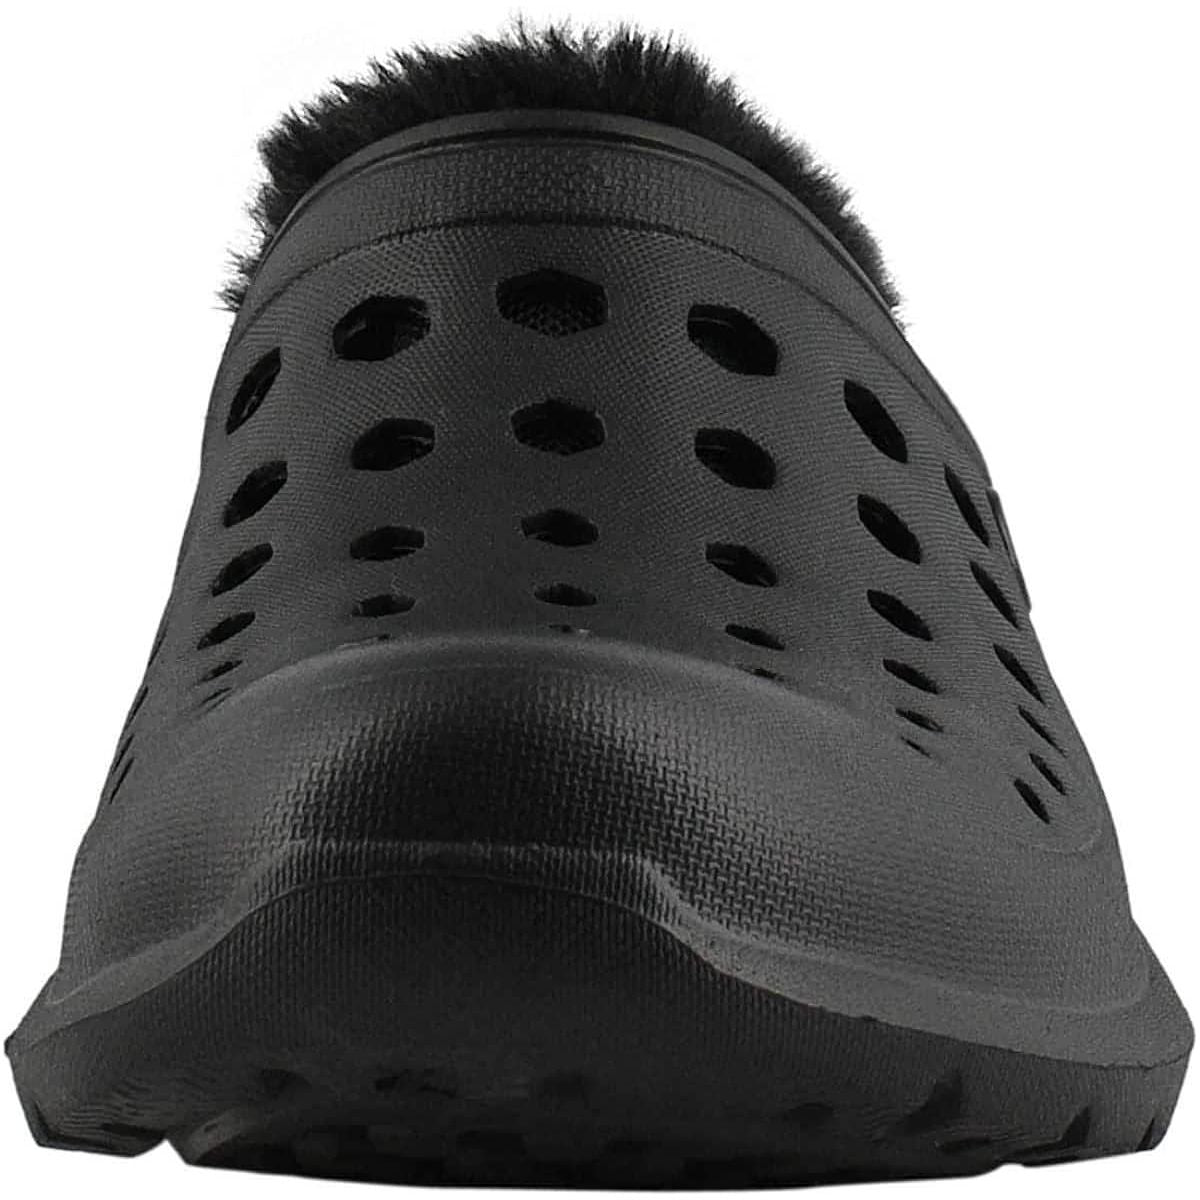 Joybees Clog Shoe Size 7 Women's Cozy Faux Fur Lined Comfort Slip On black